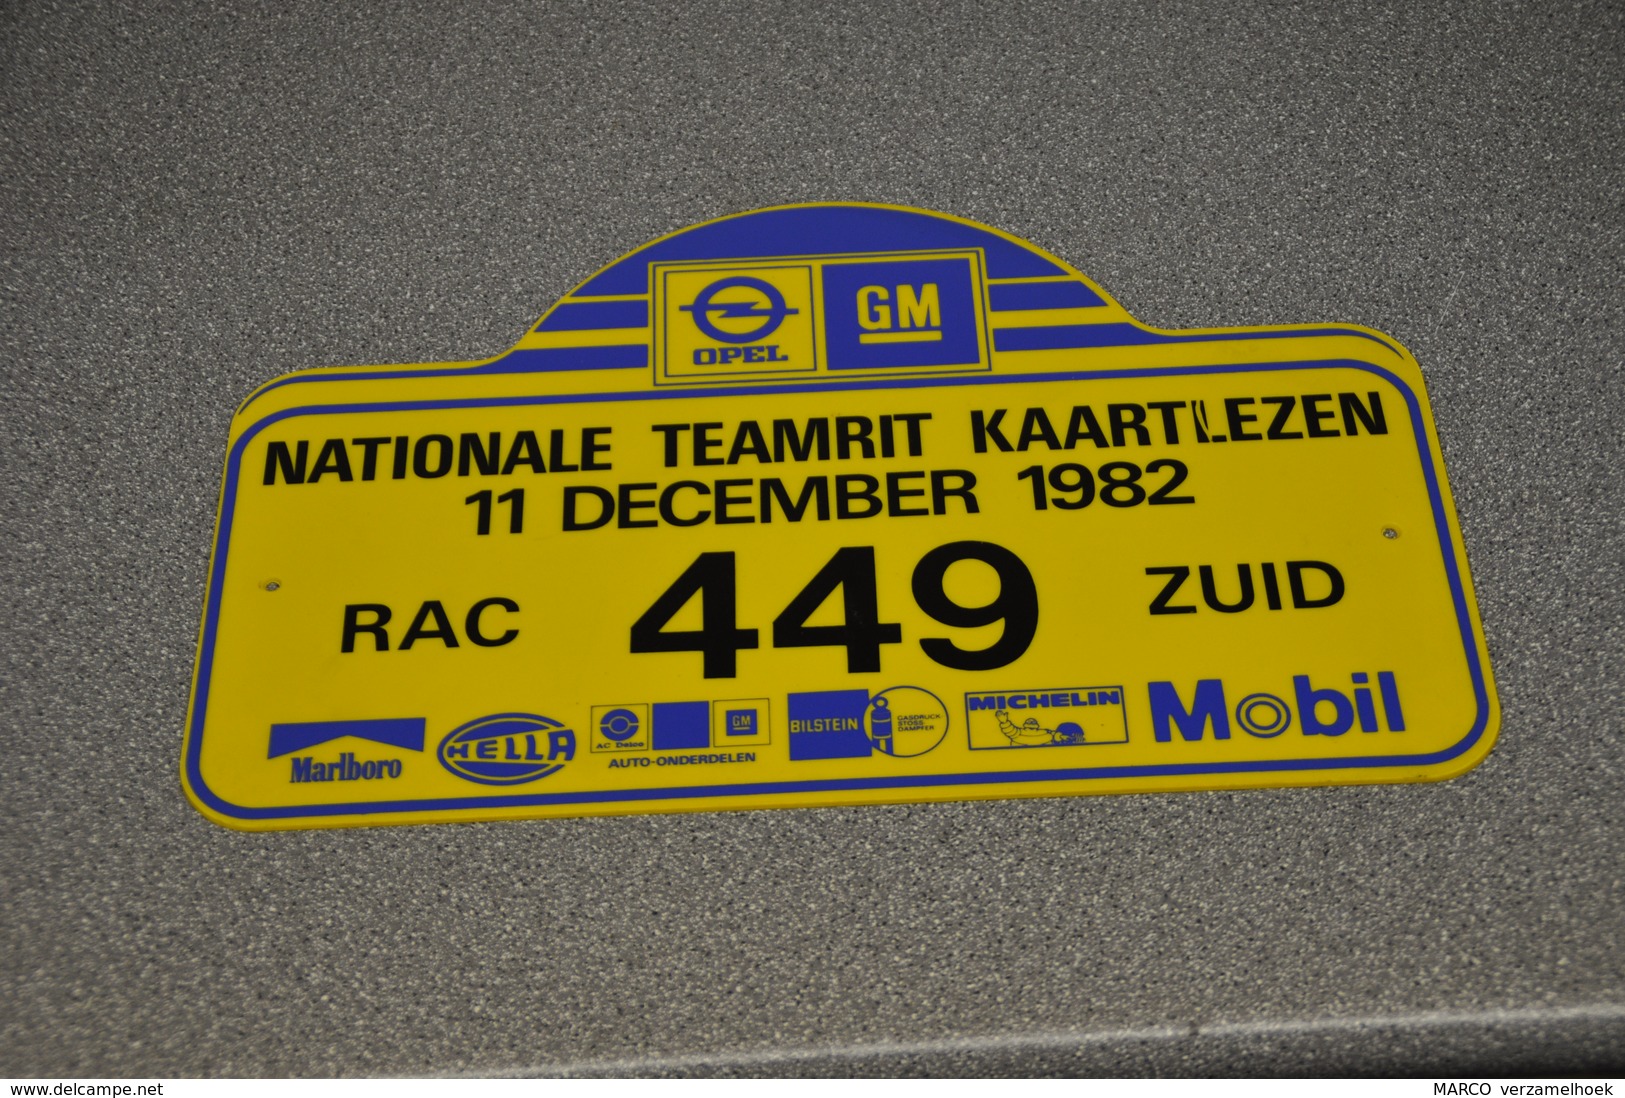 Rally Plaat-rallye Plaque Plastic: Nat. Teamrit 1982 RAC-zuid Opel-GM-marlboro-hella-michelin-mobil - Rally-affiches